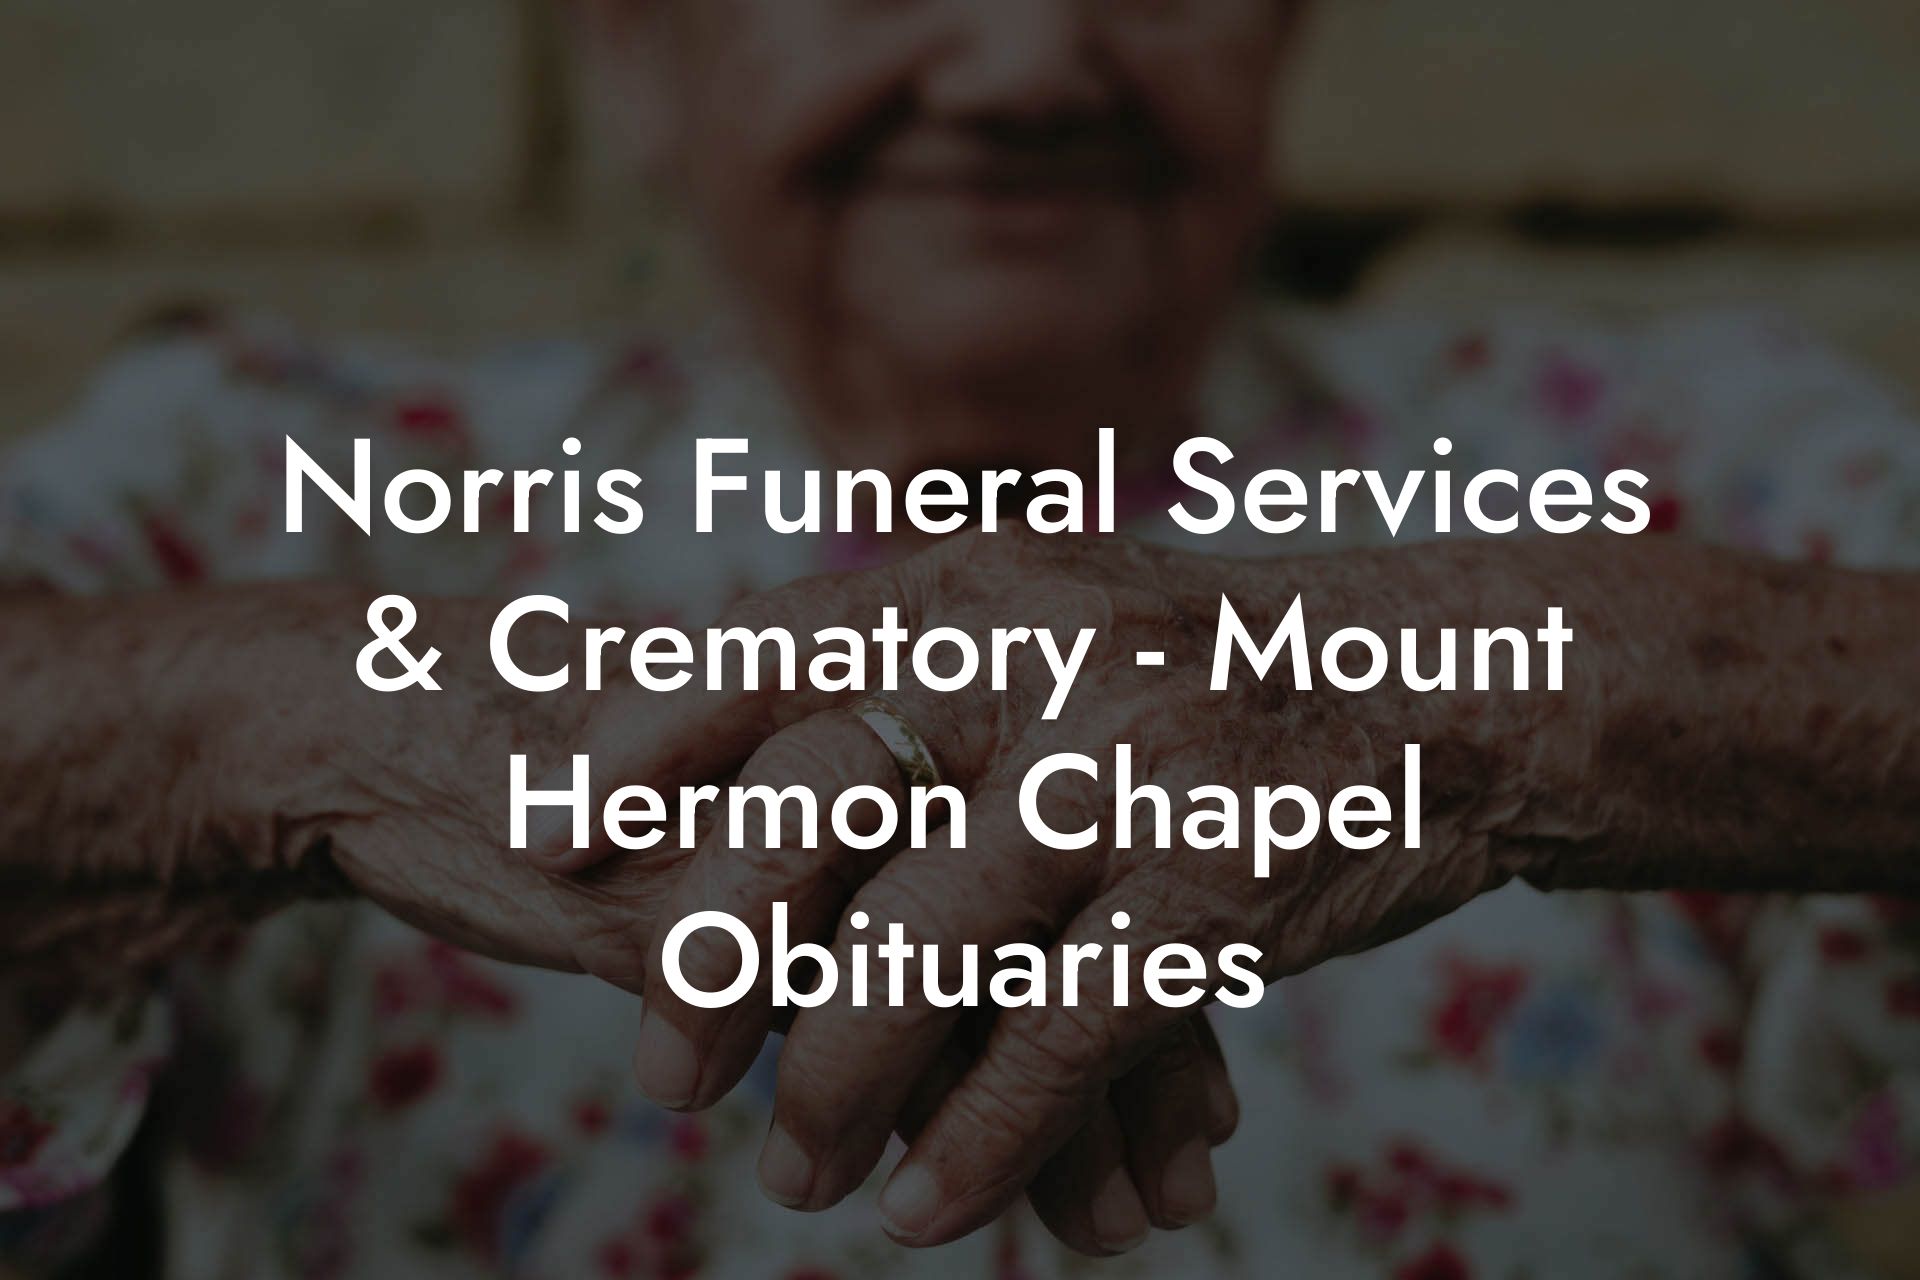 Norris Funeral Services & Crematory - Mount Hermon Chapel Obituaries